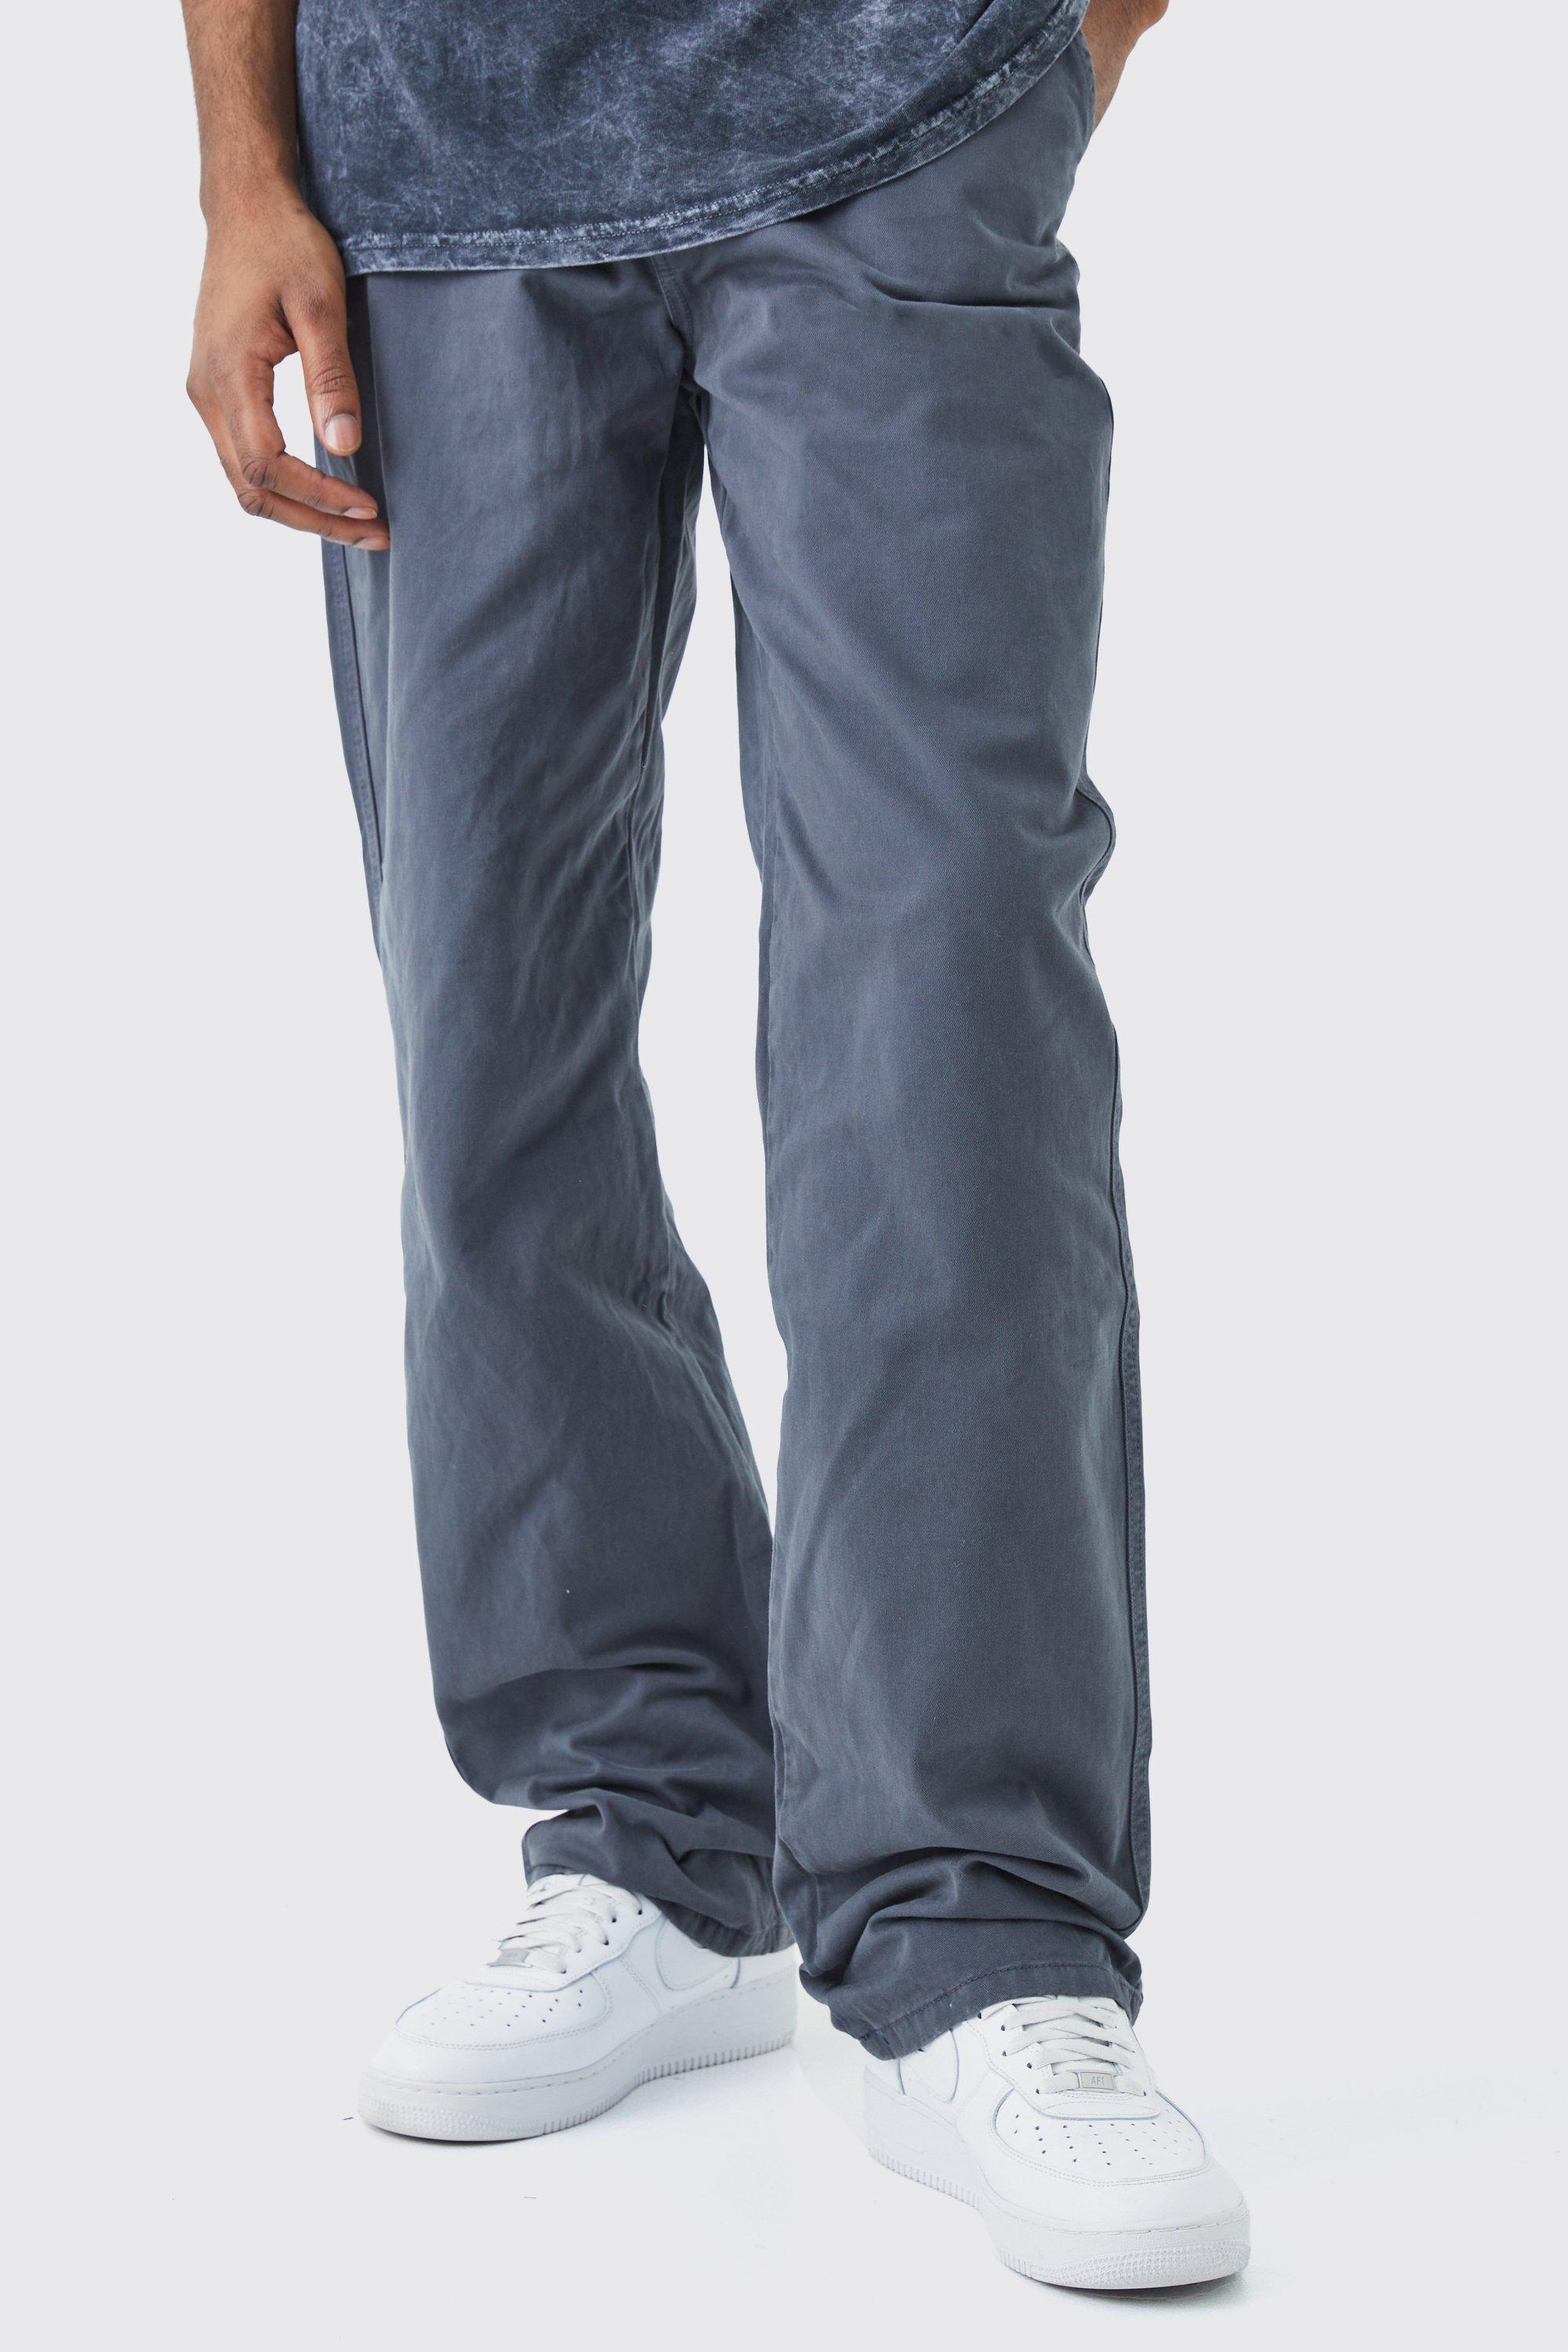 tall - pantalon chino large homme - gris - 30, gris